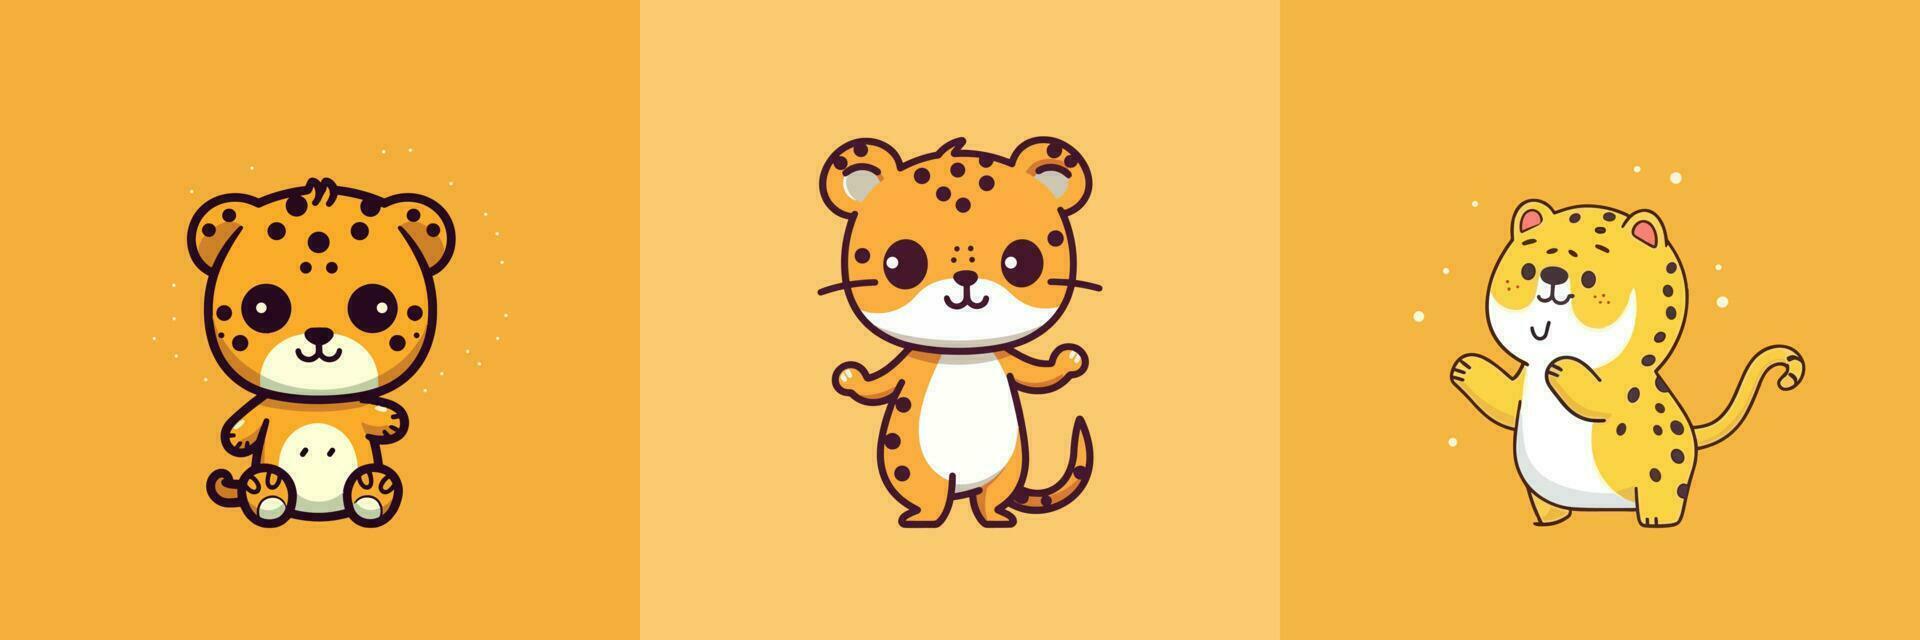 Cute kawaii Cheetah cartoon illustration vector